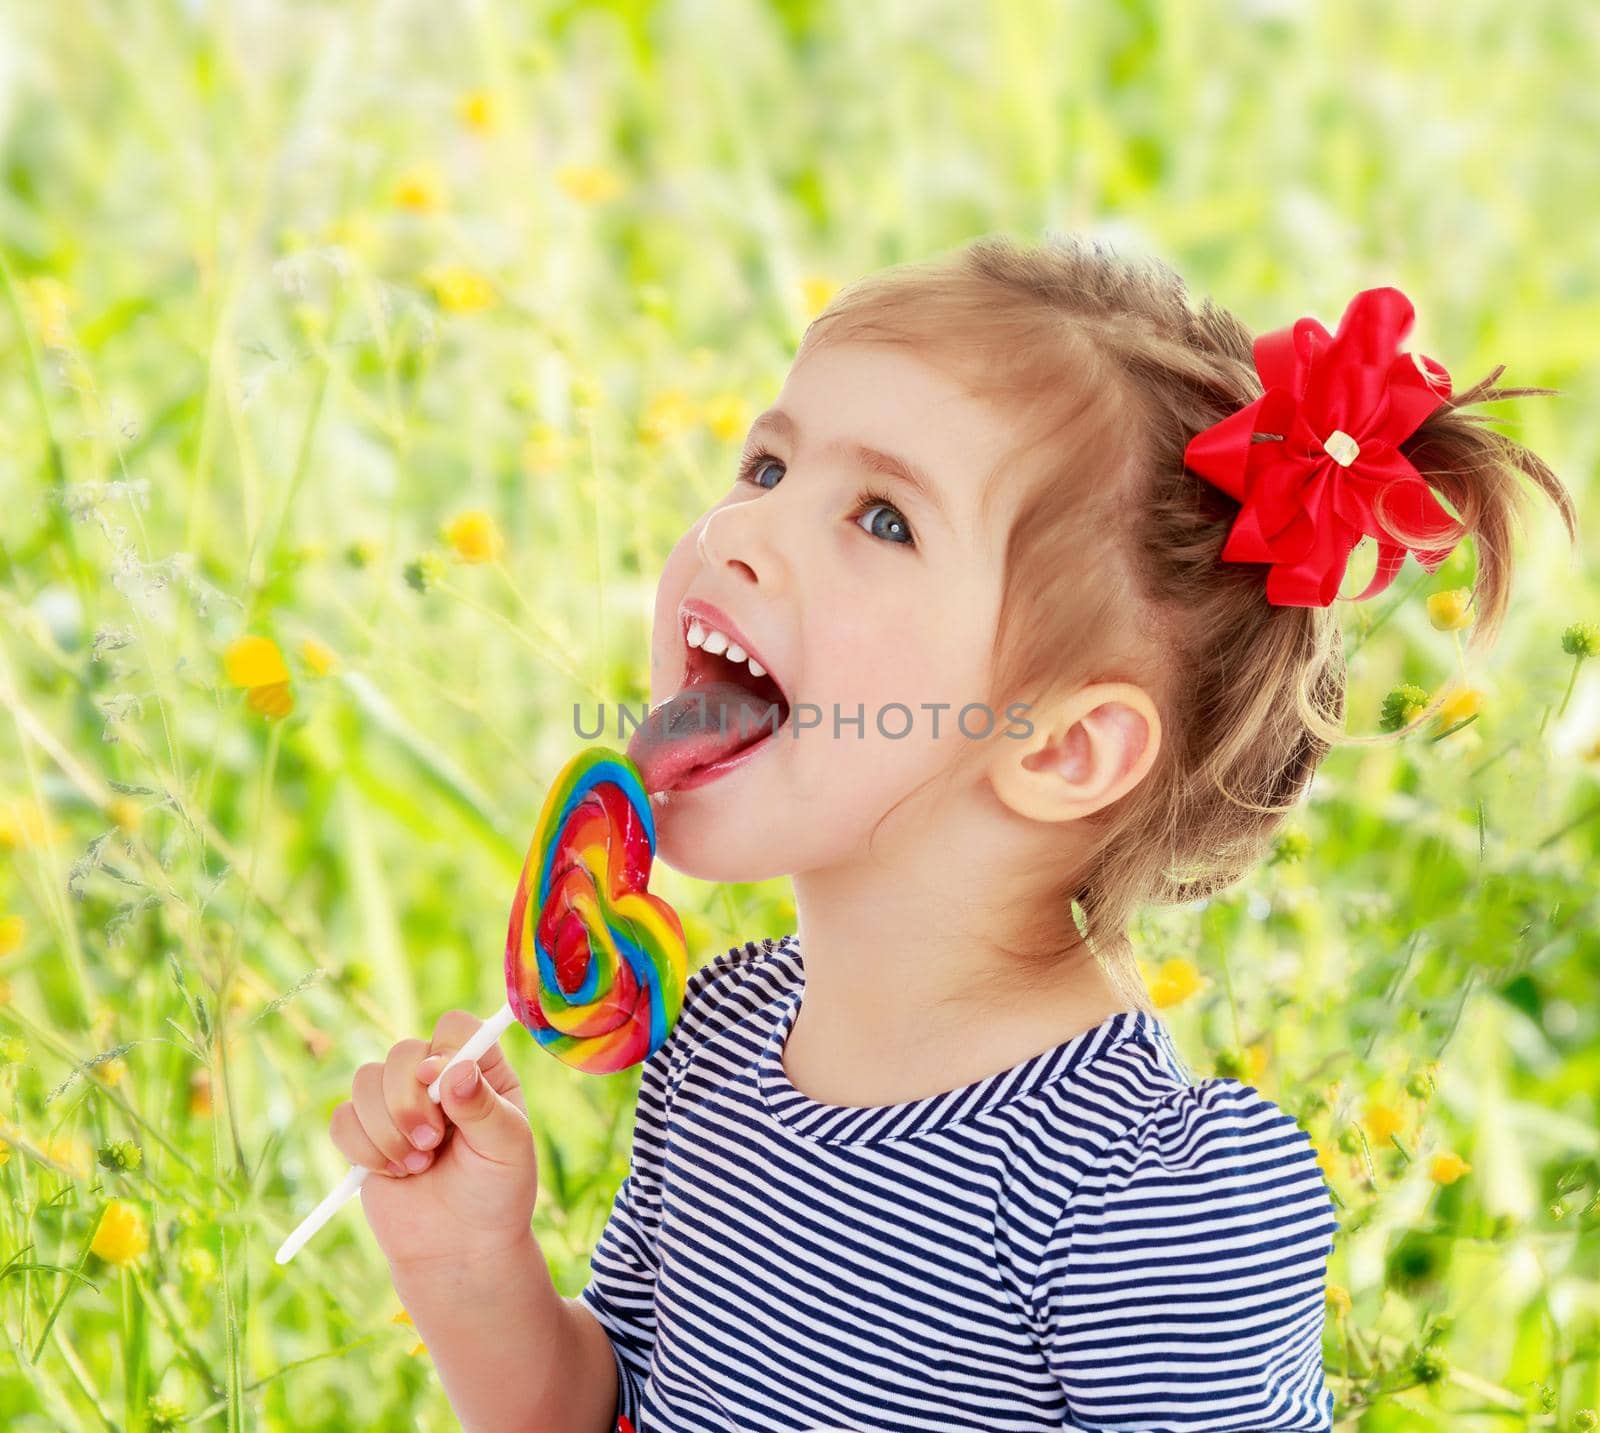 Girl licks candy on a stick by kolesnikov_studio